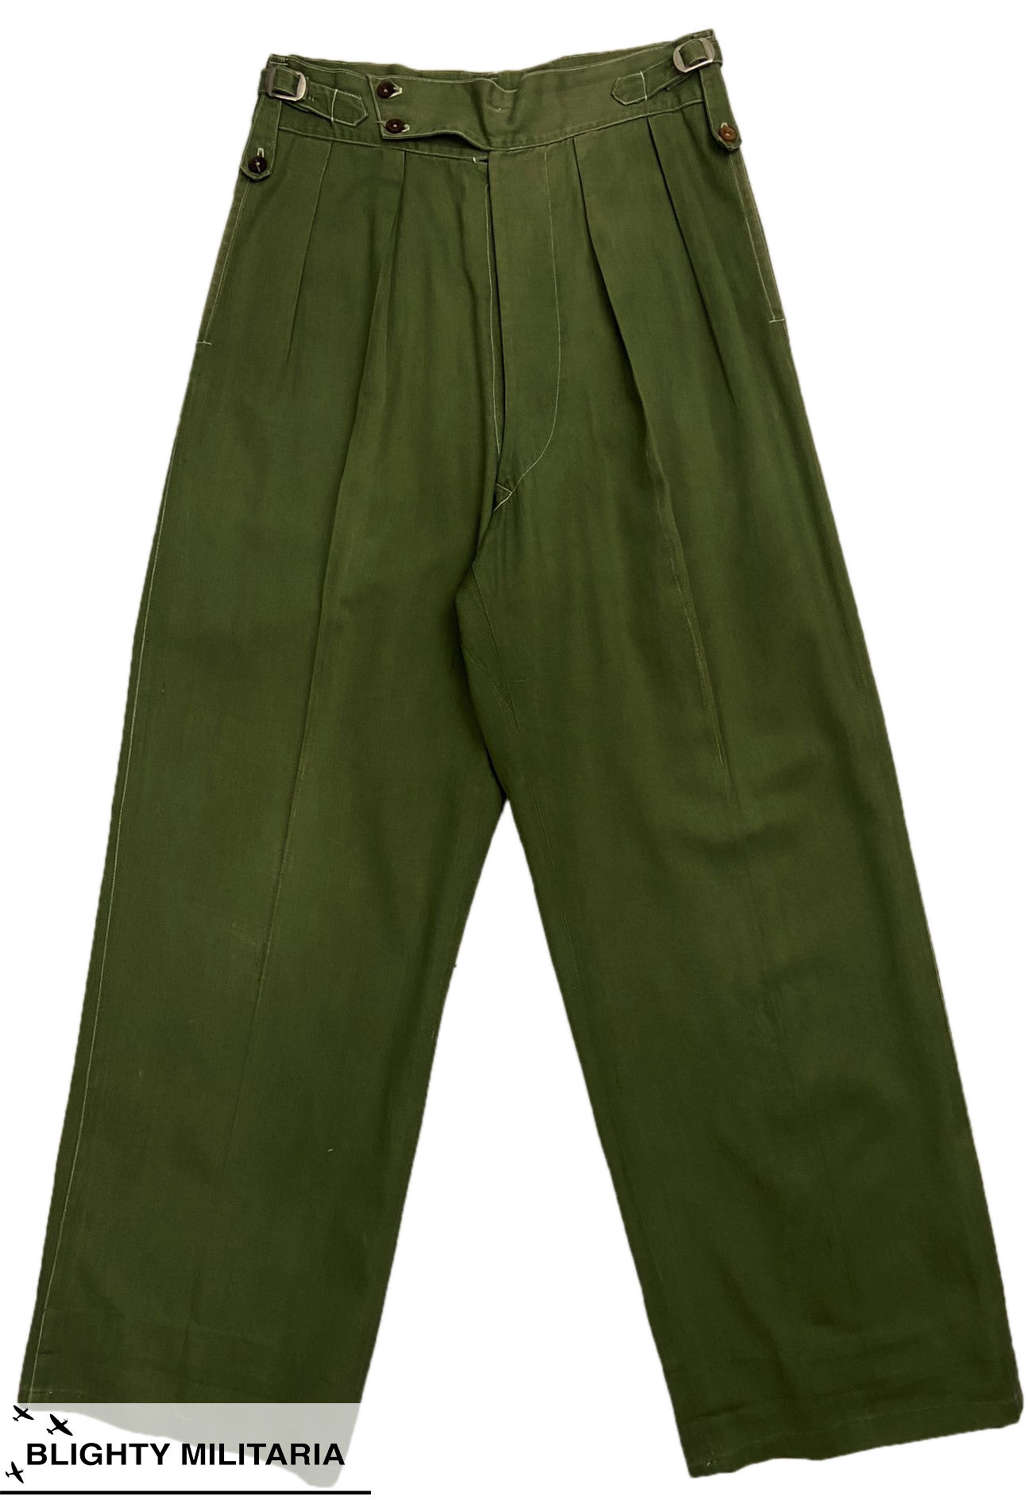 Original 1940s British Jungle Green Trousers - Size 29 x 30